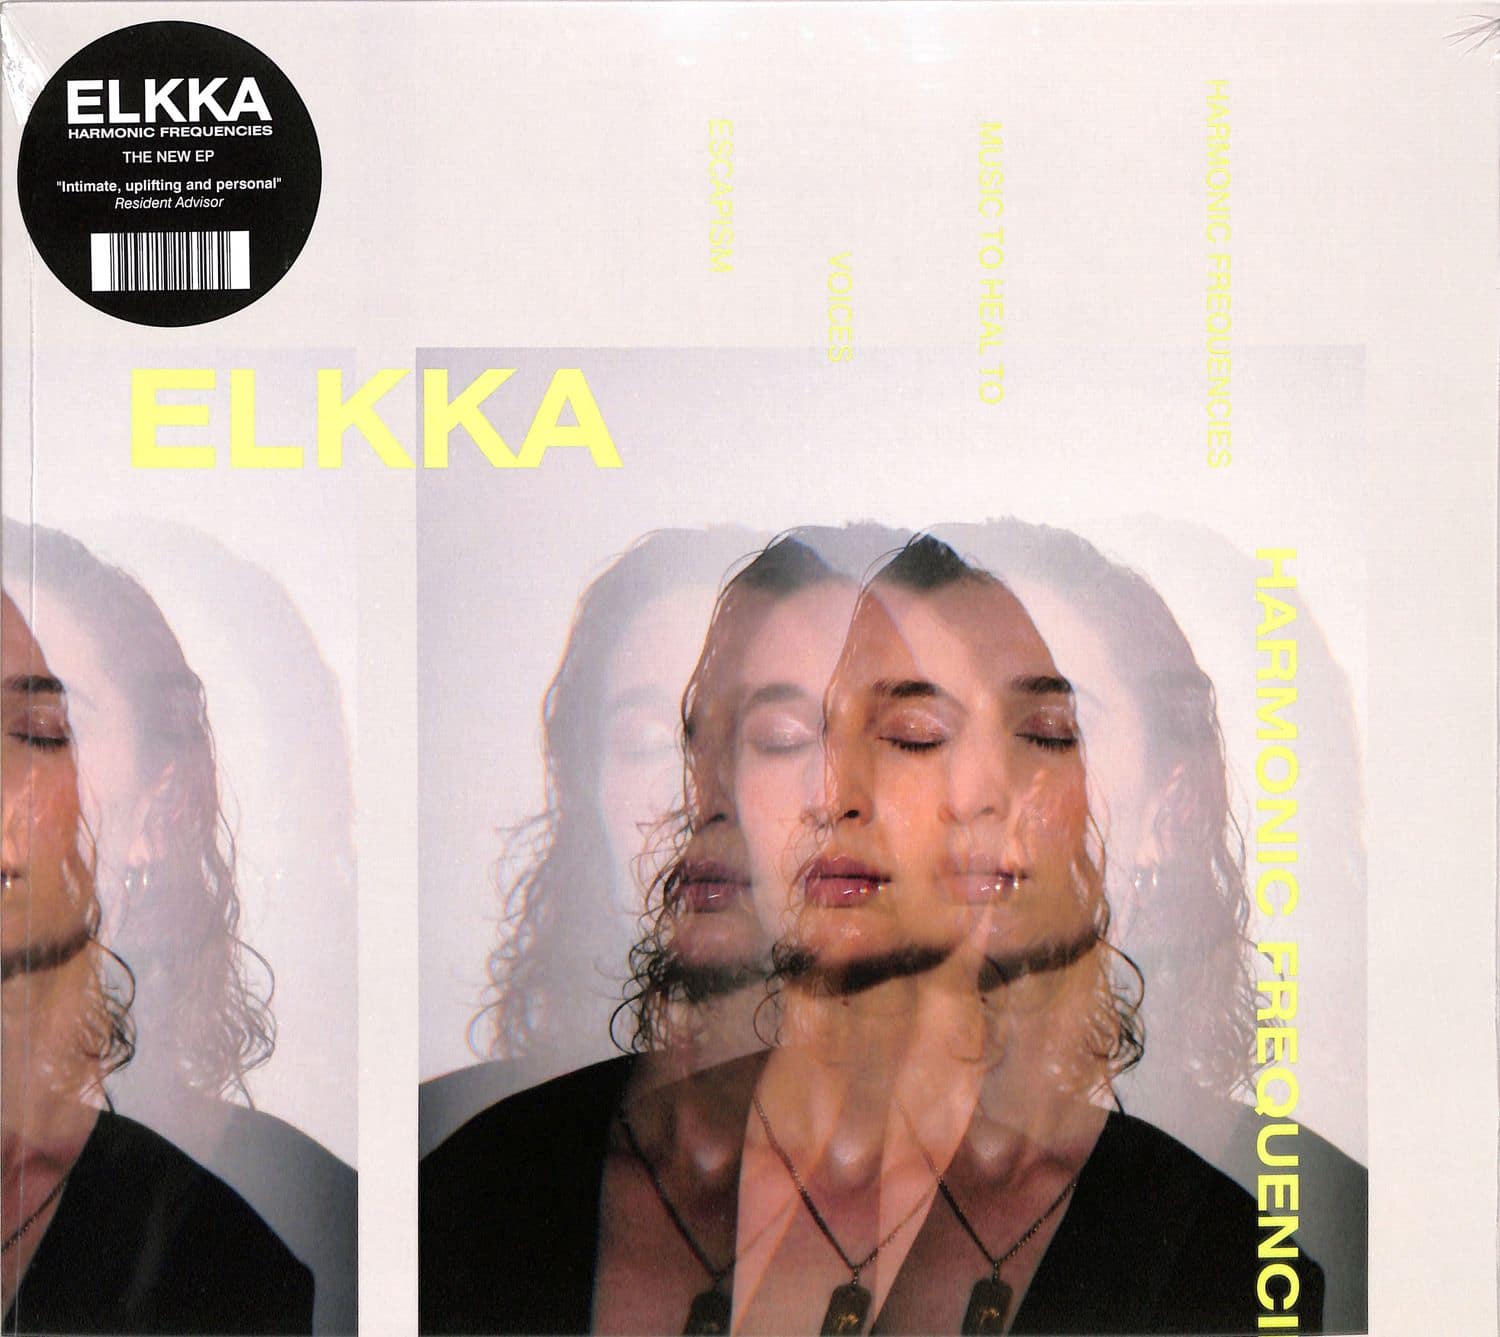 Elkka - Harmonic Frequencies 